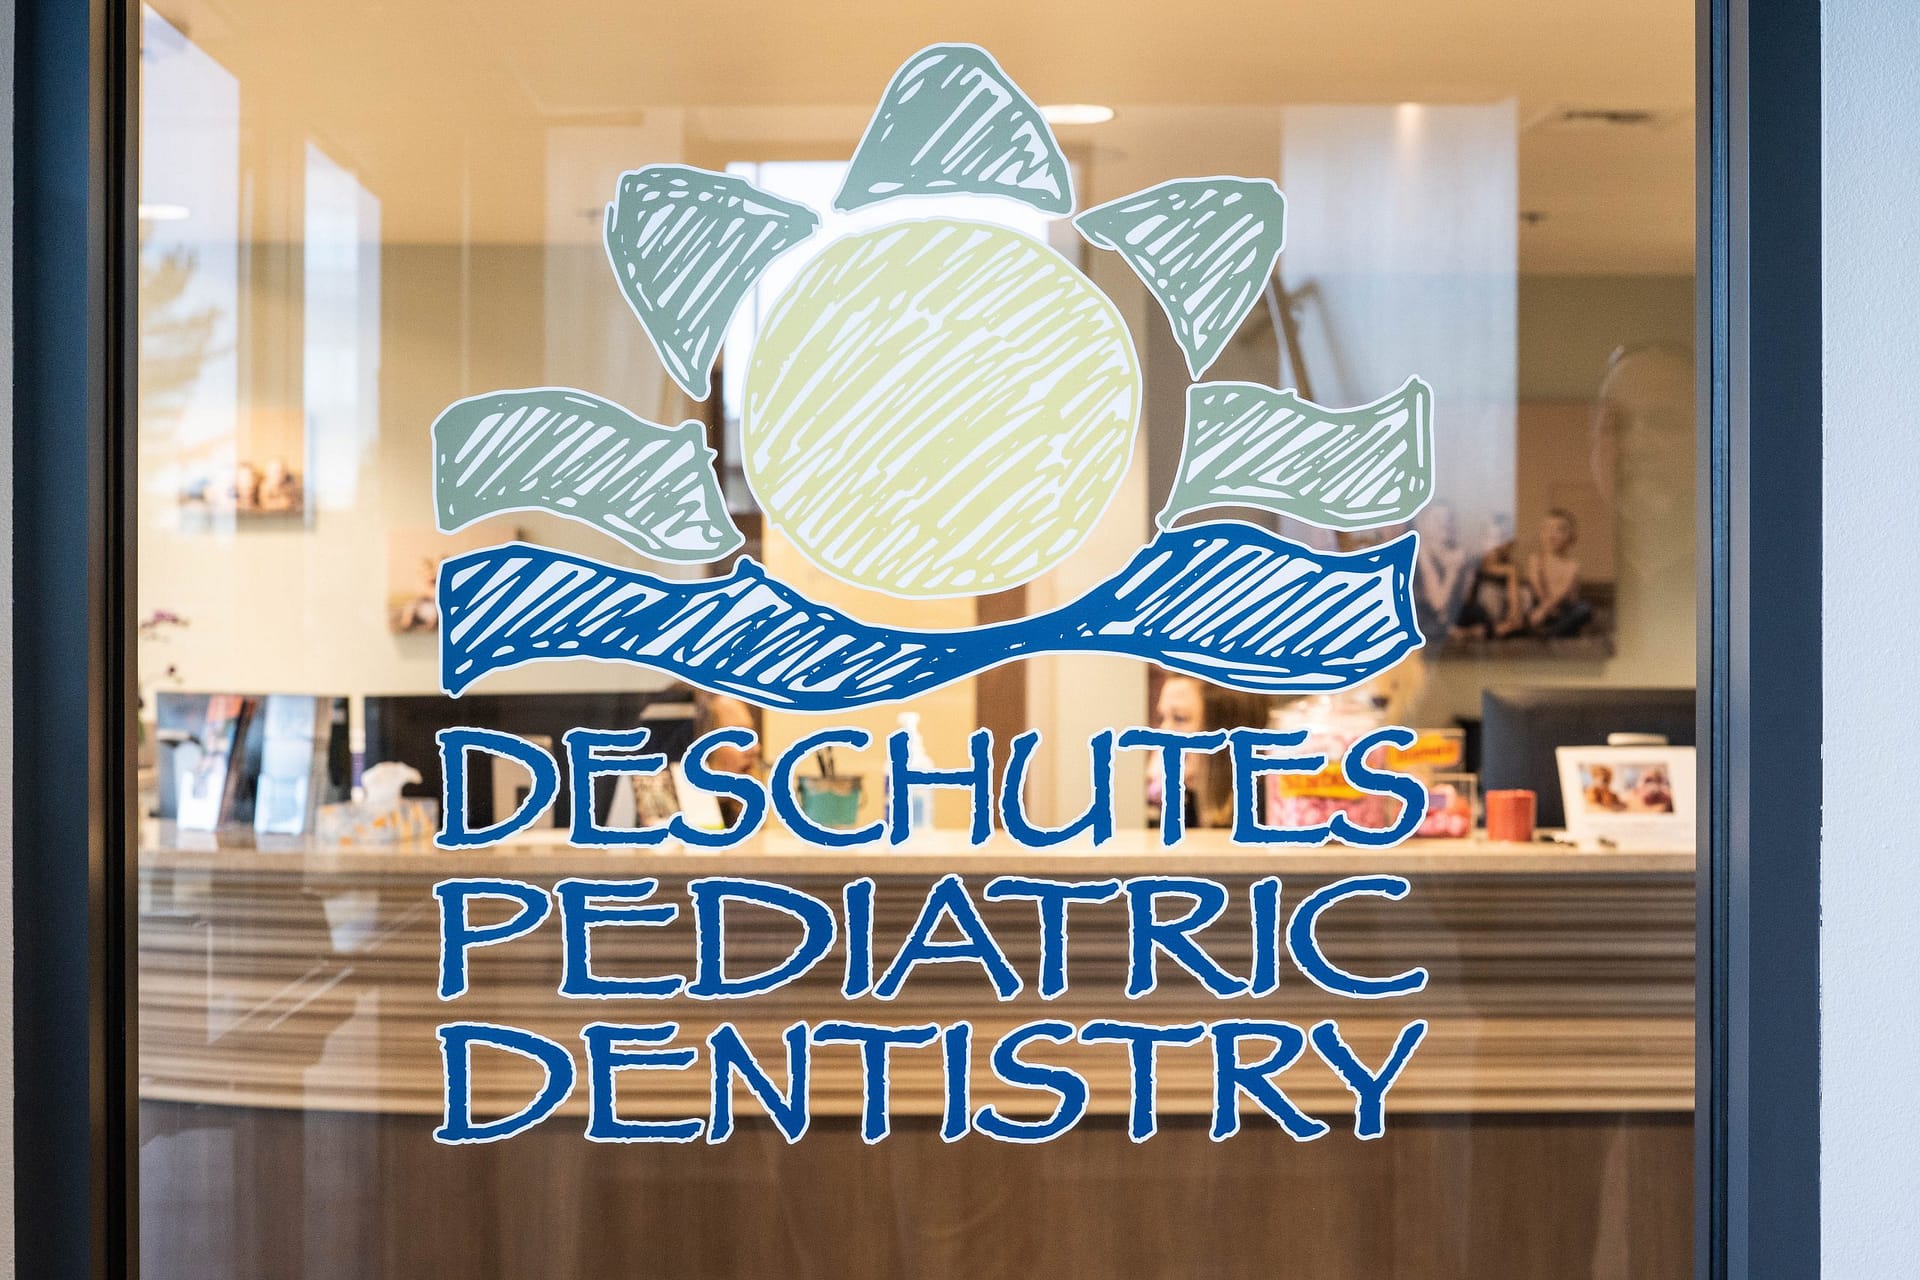 Deschutes Pediatric Dentistry